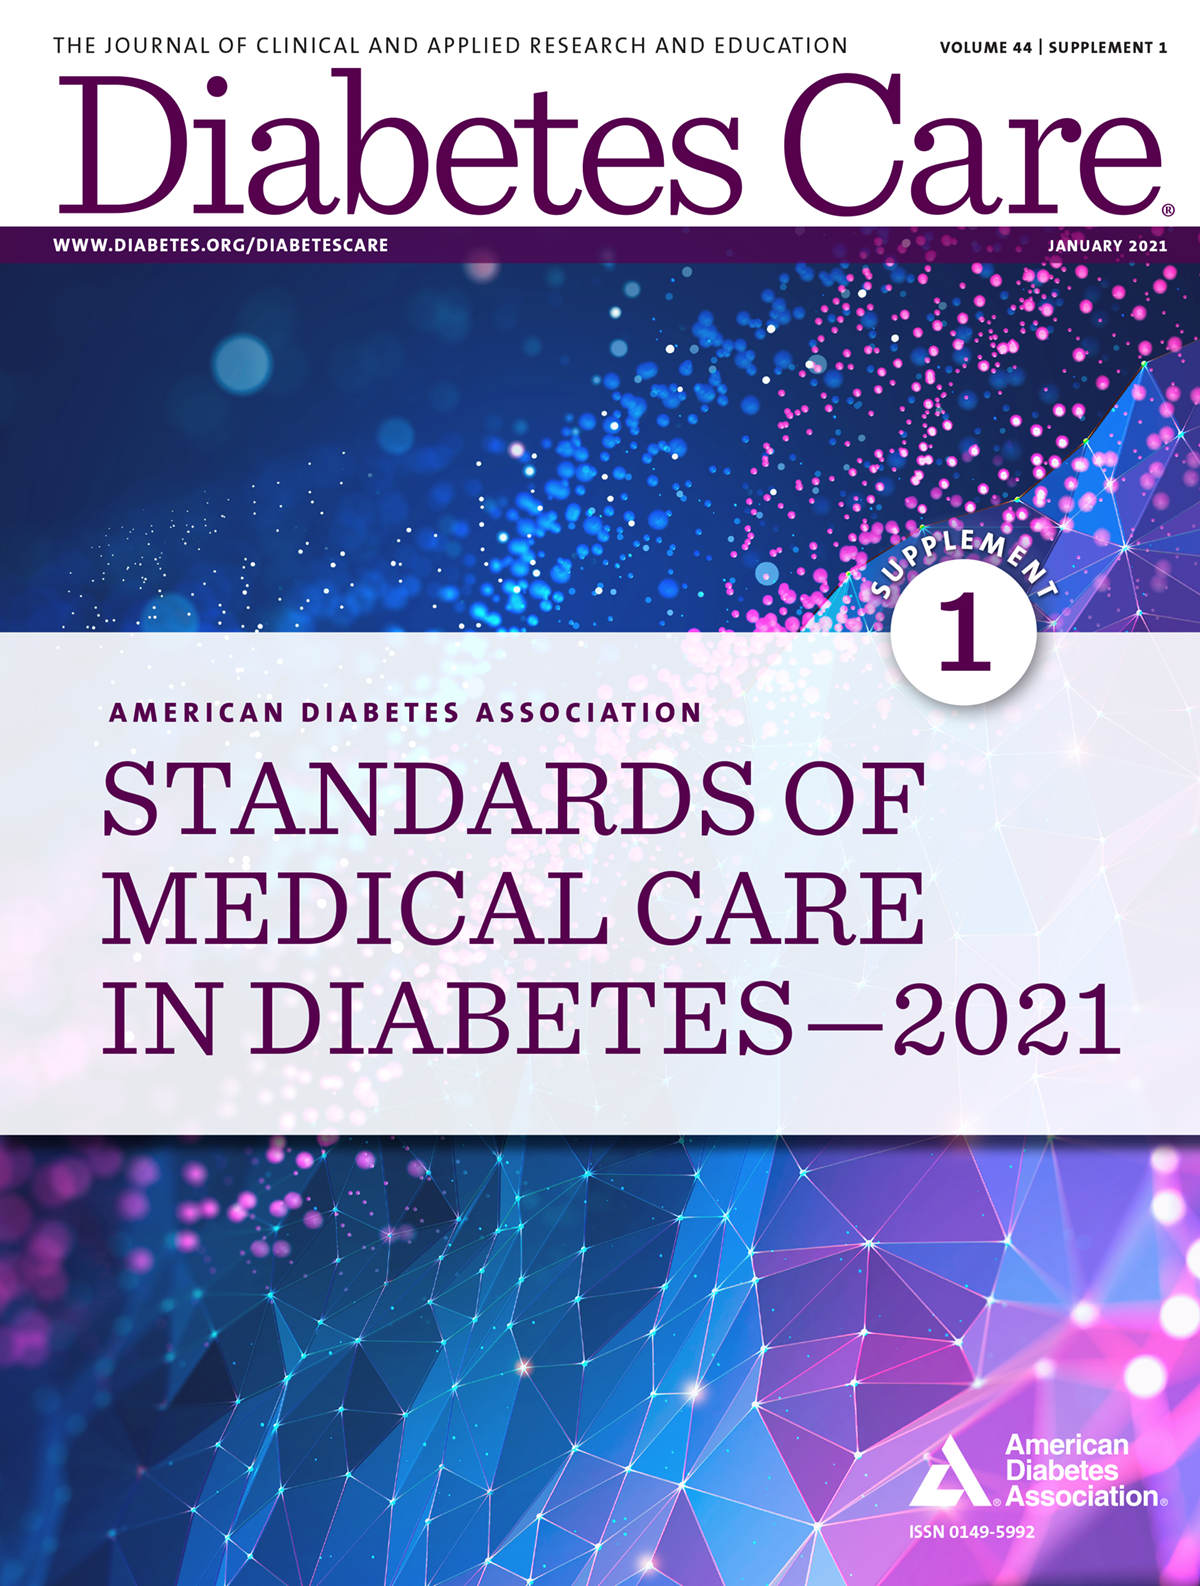 Standars of Medical Care in Diabetes 2021